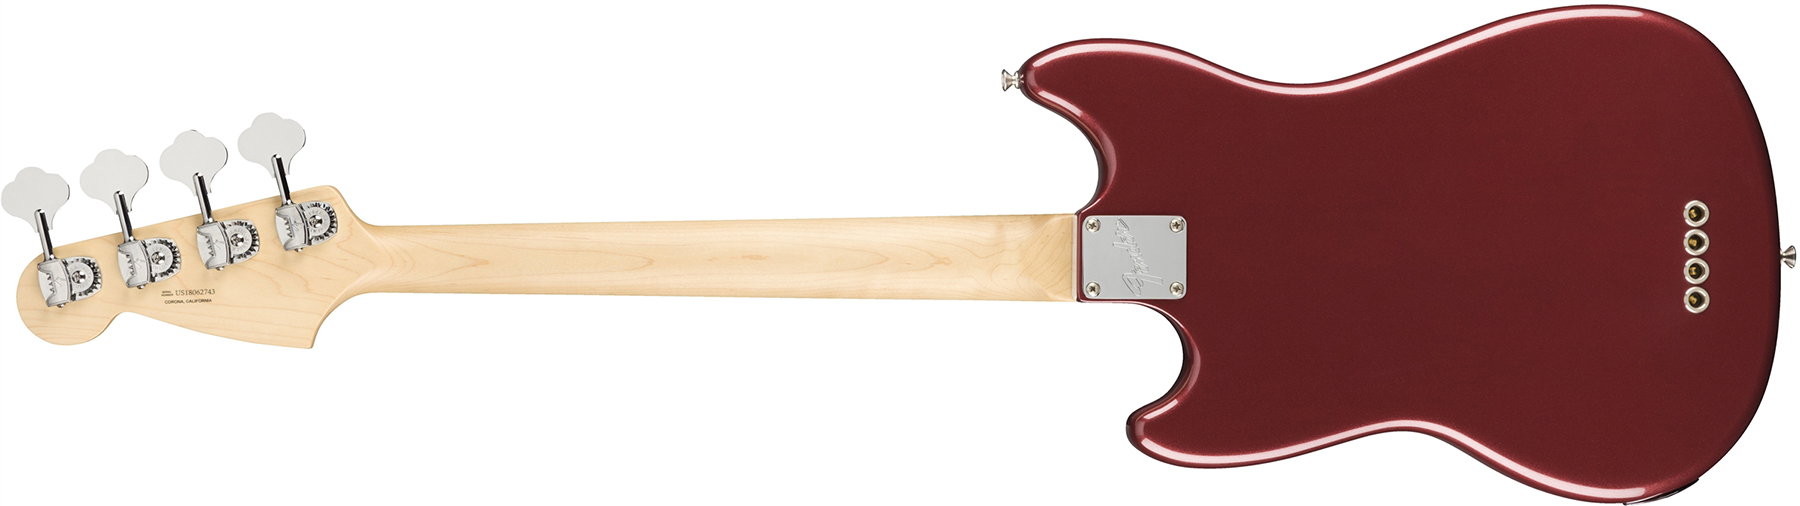 Fender Mustang Bass American Performer Usa Rw - Aubergine - Basse Électrique Enfants - Variation 1